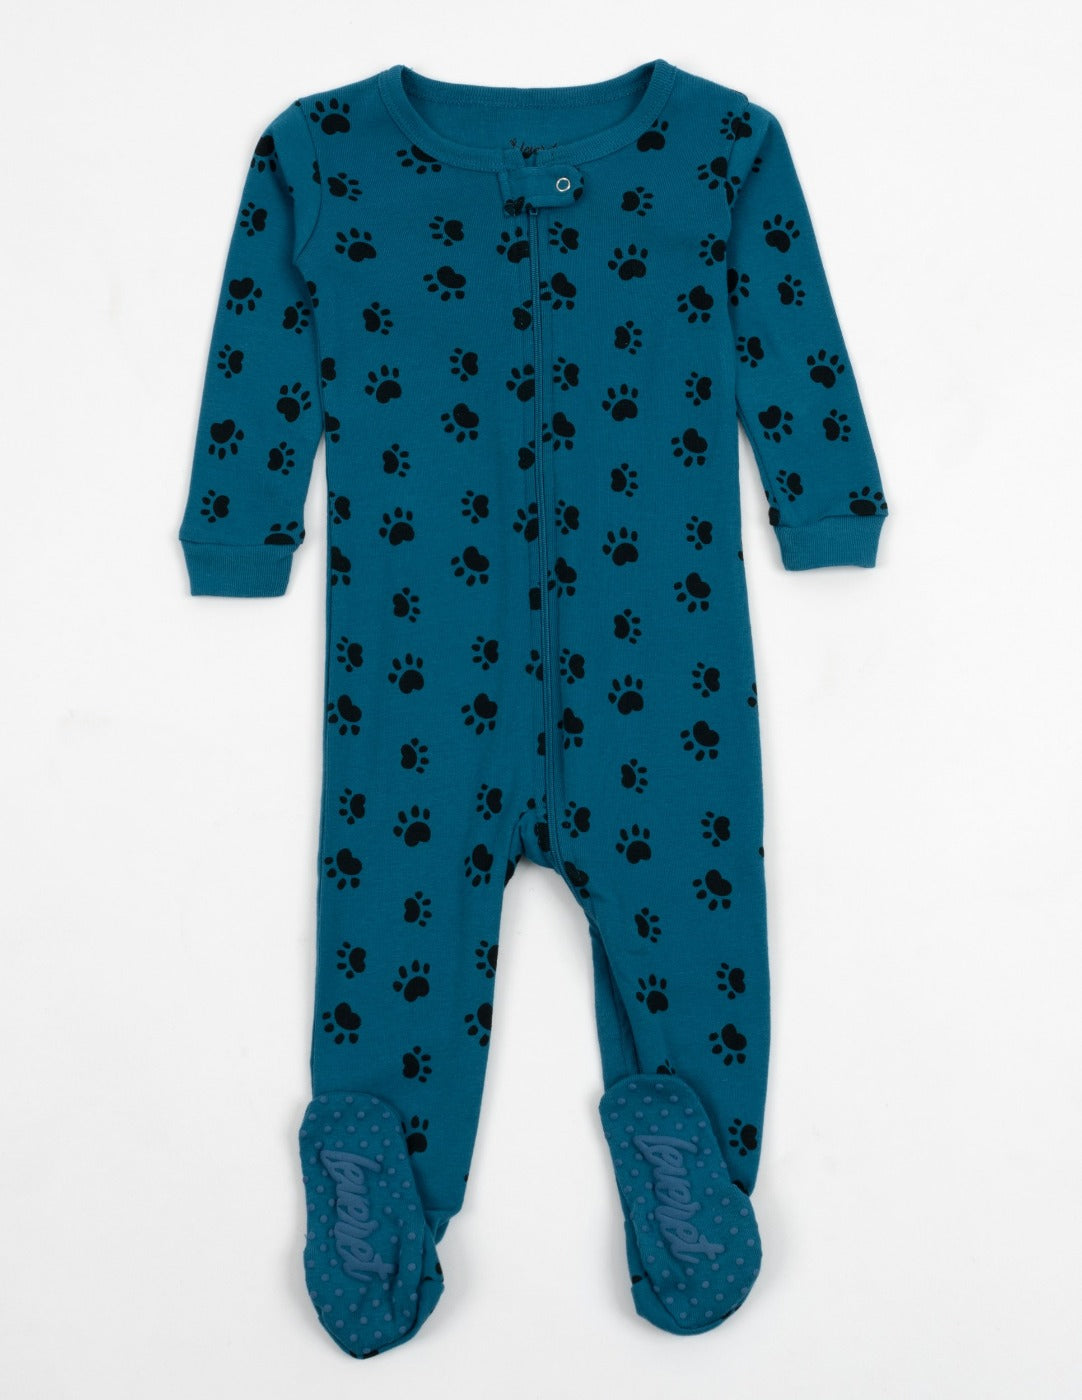 blue paw print cotton footed baby pajama